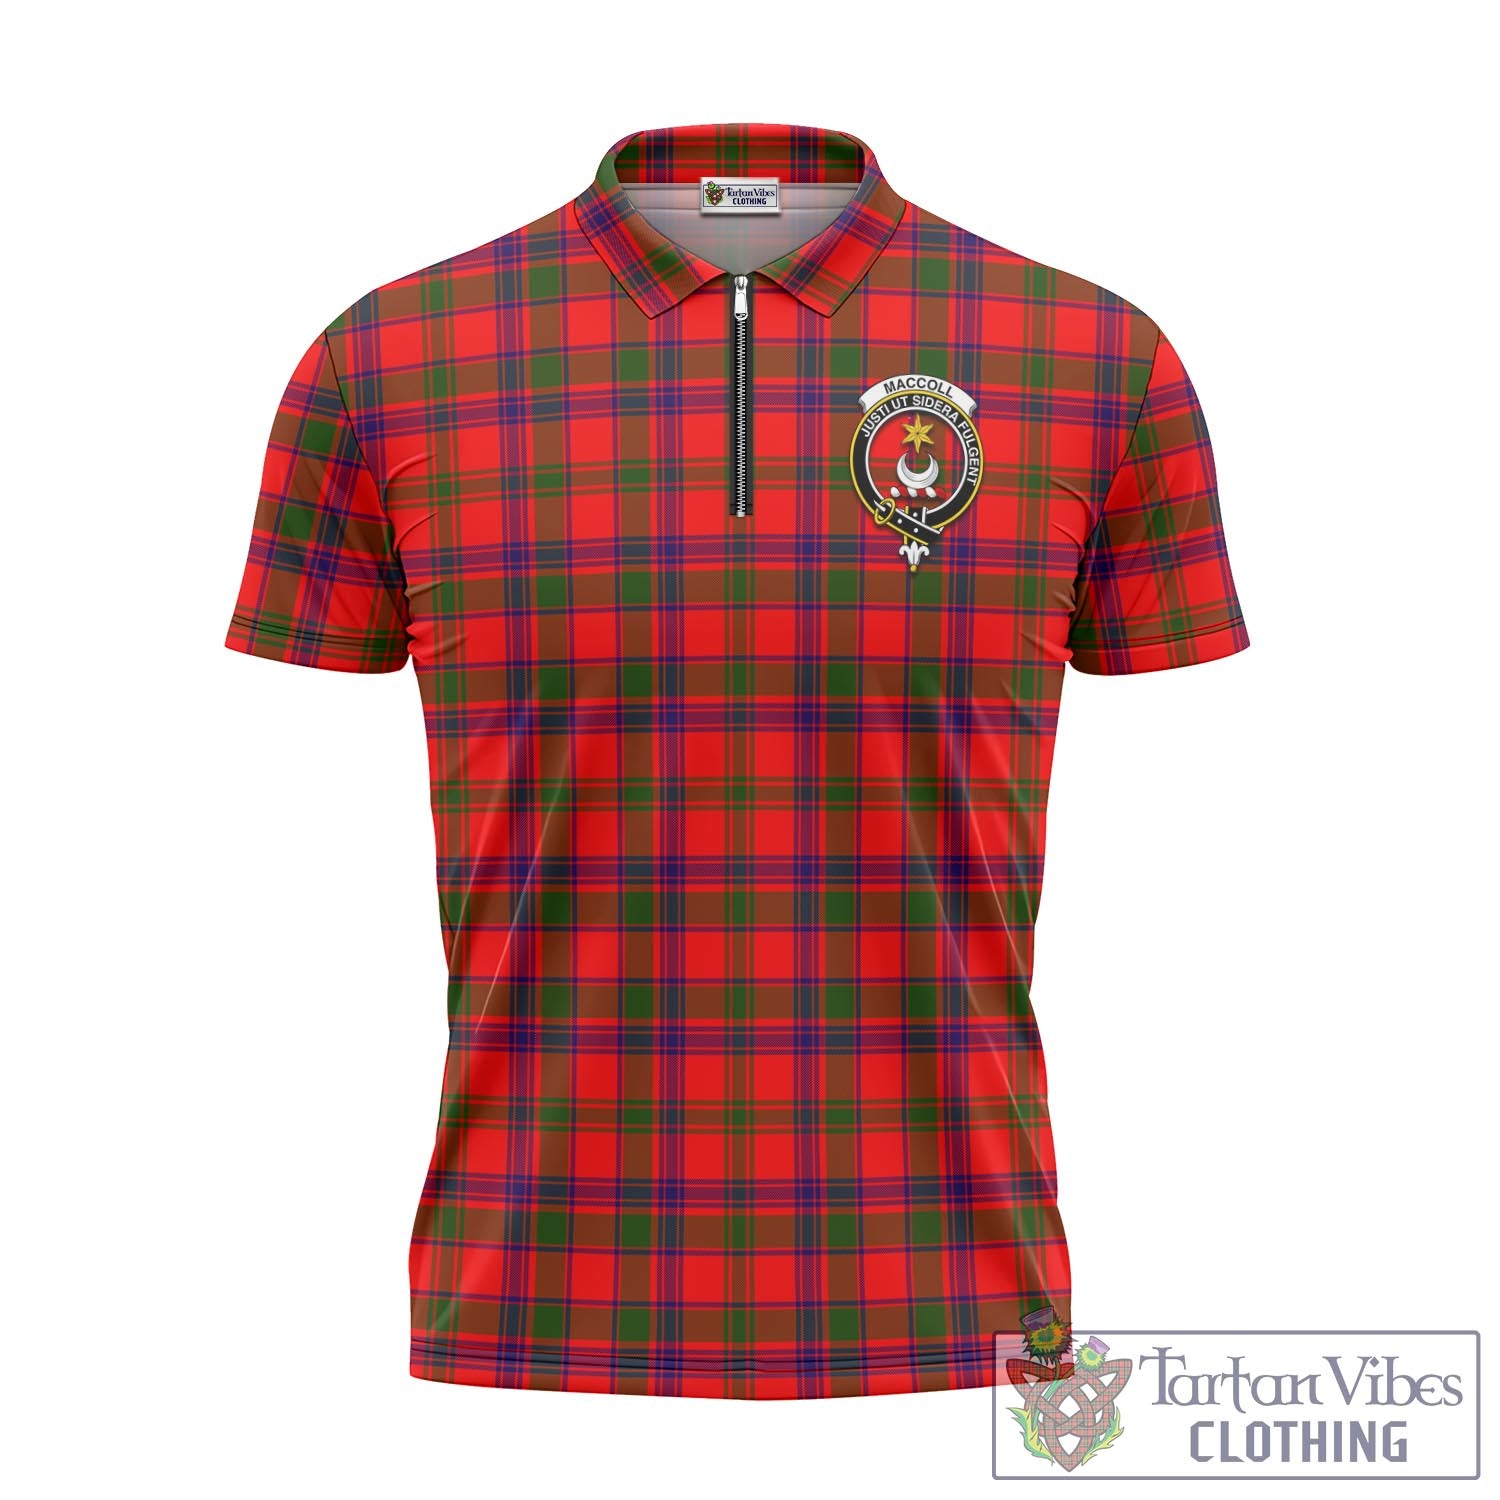 Tartan Vibes Clothing MacColl Modern Tartan Zipper Polo Shirt with Family Crest